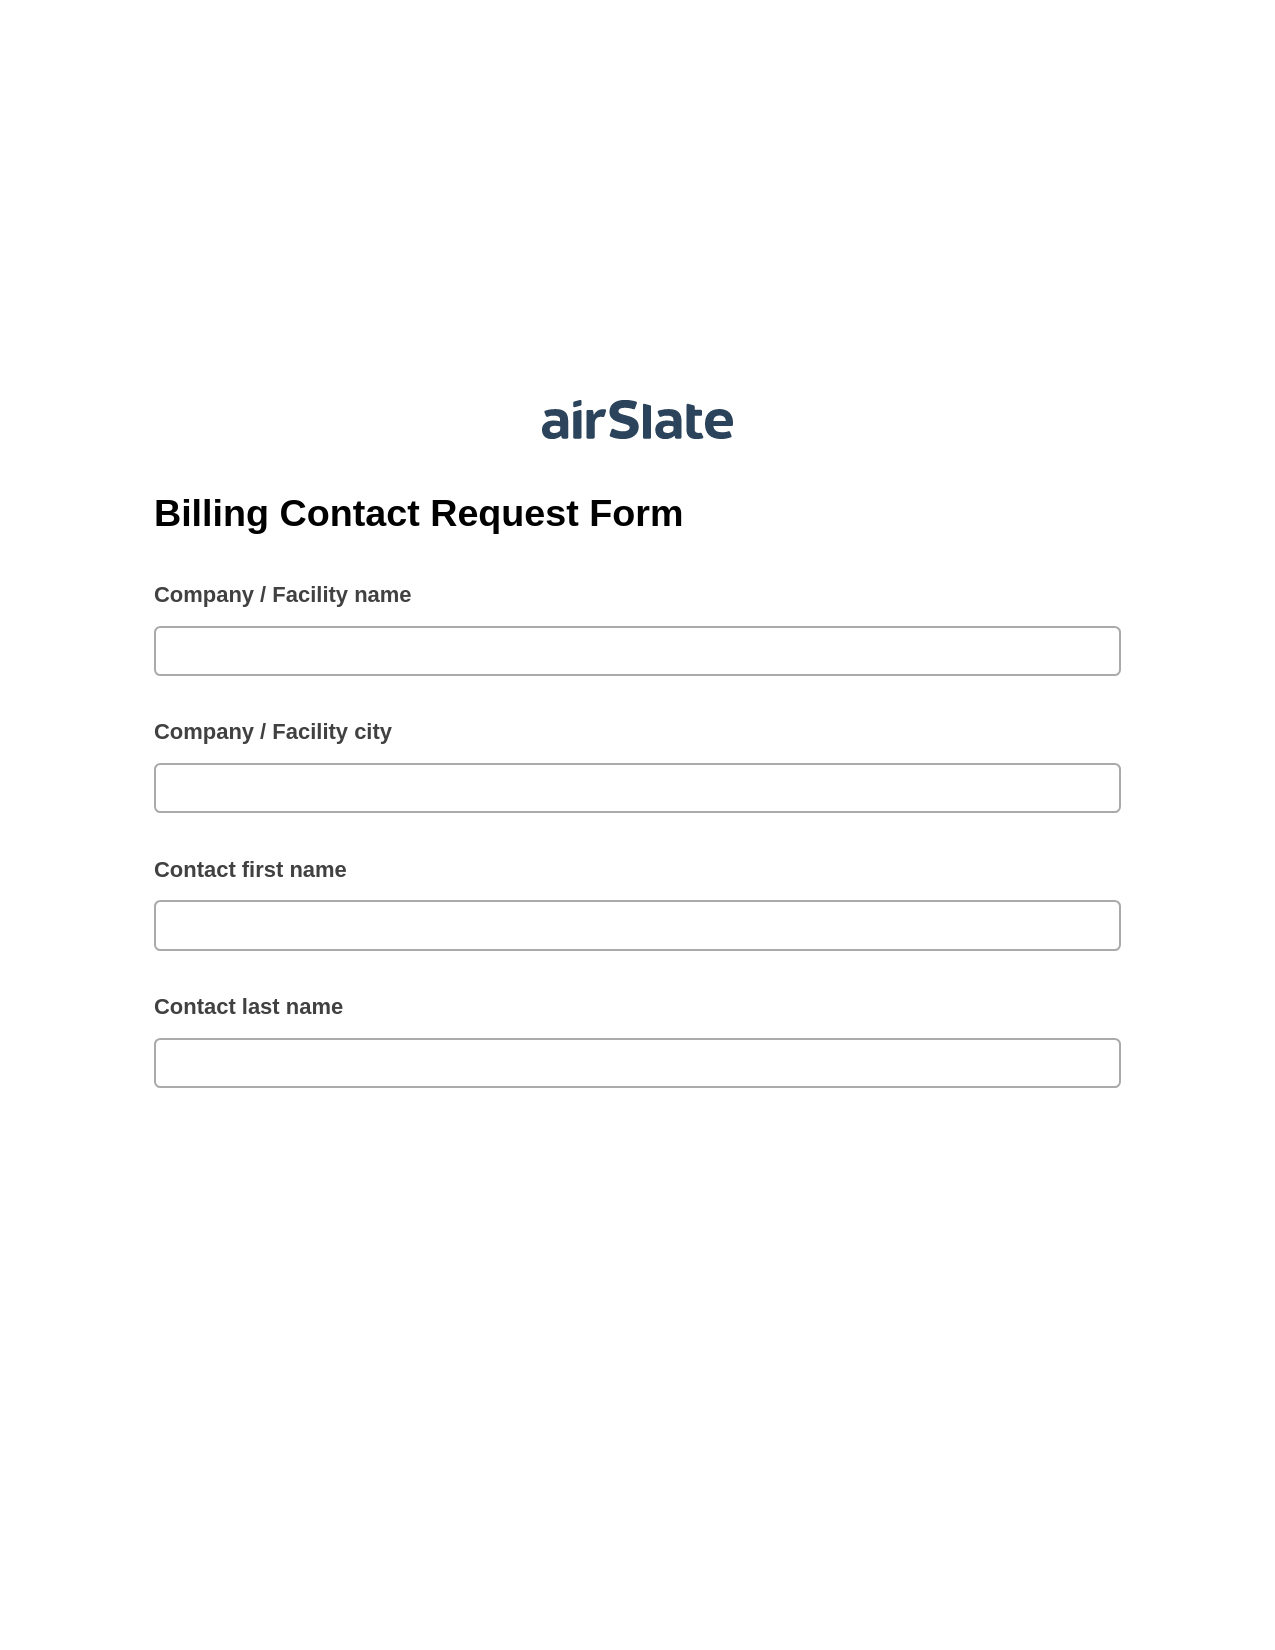 Billing Contact Request Form Pre-fill Document Bot, Webhook Bot, Webhook Postfinish Bot